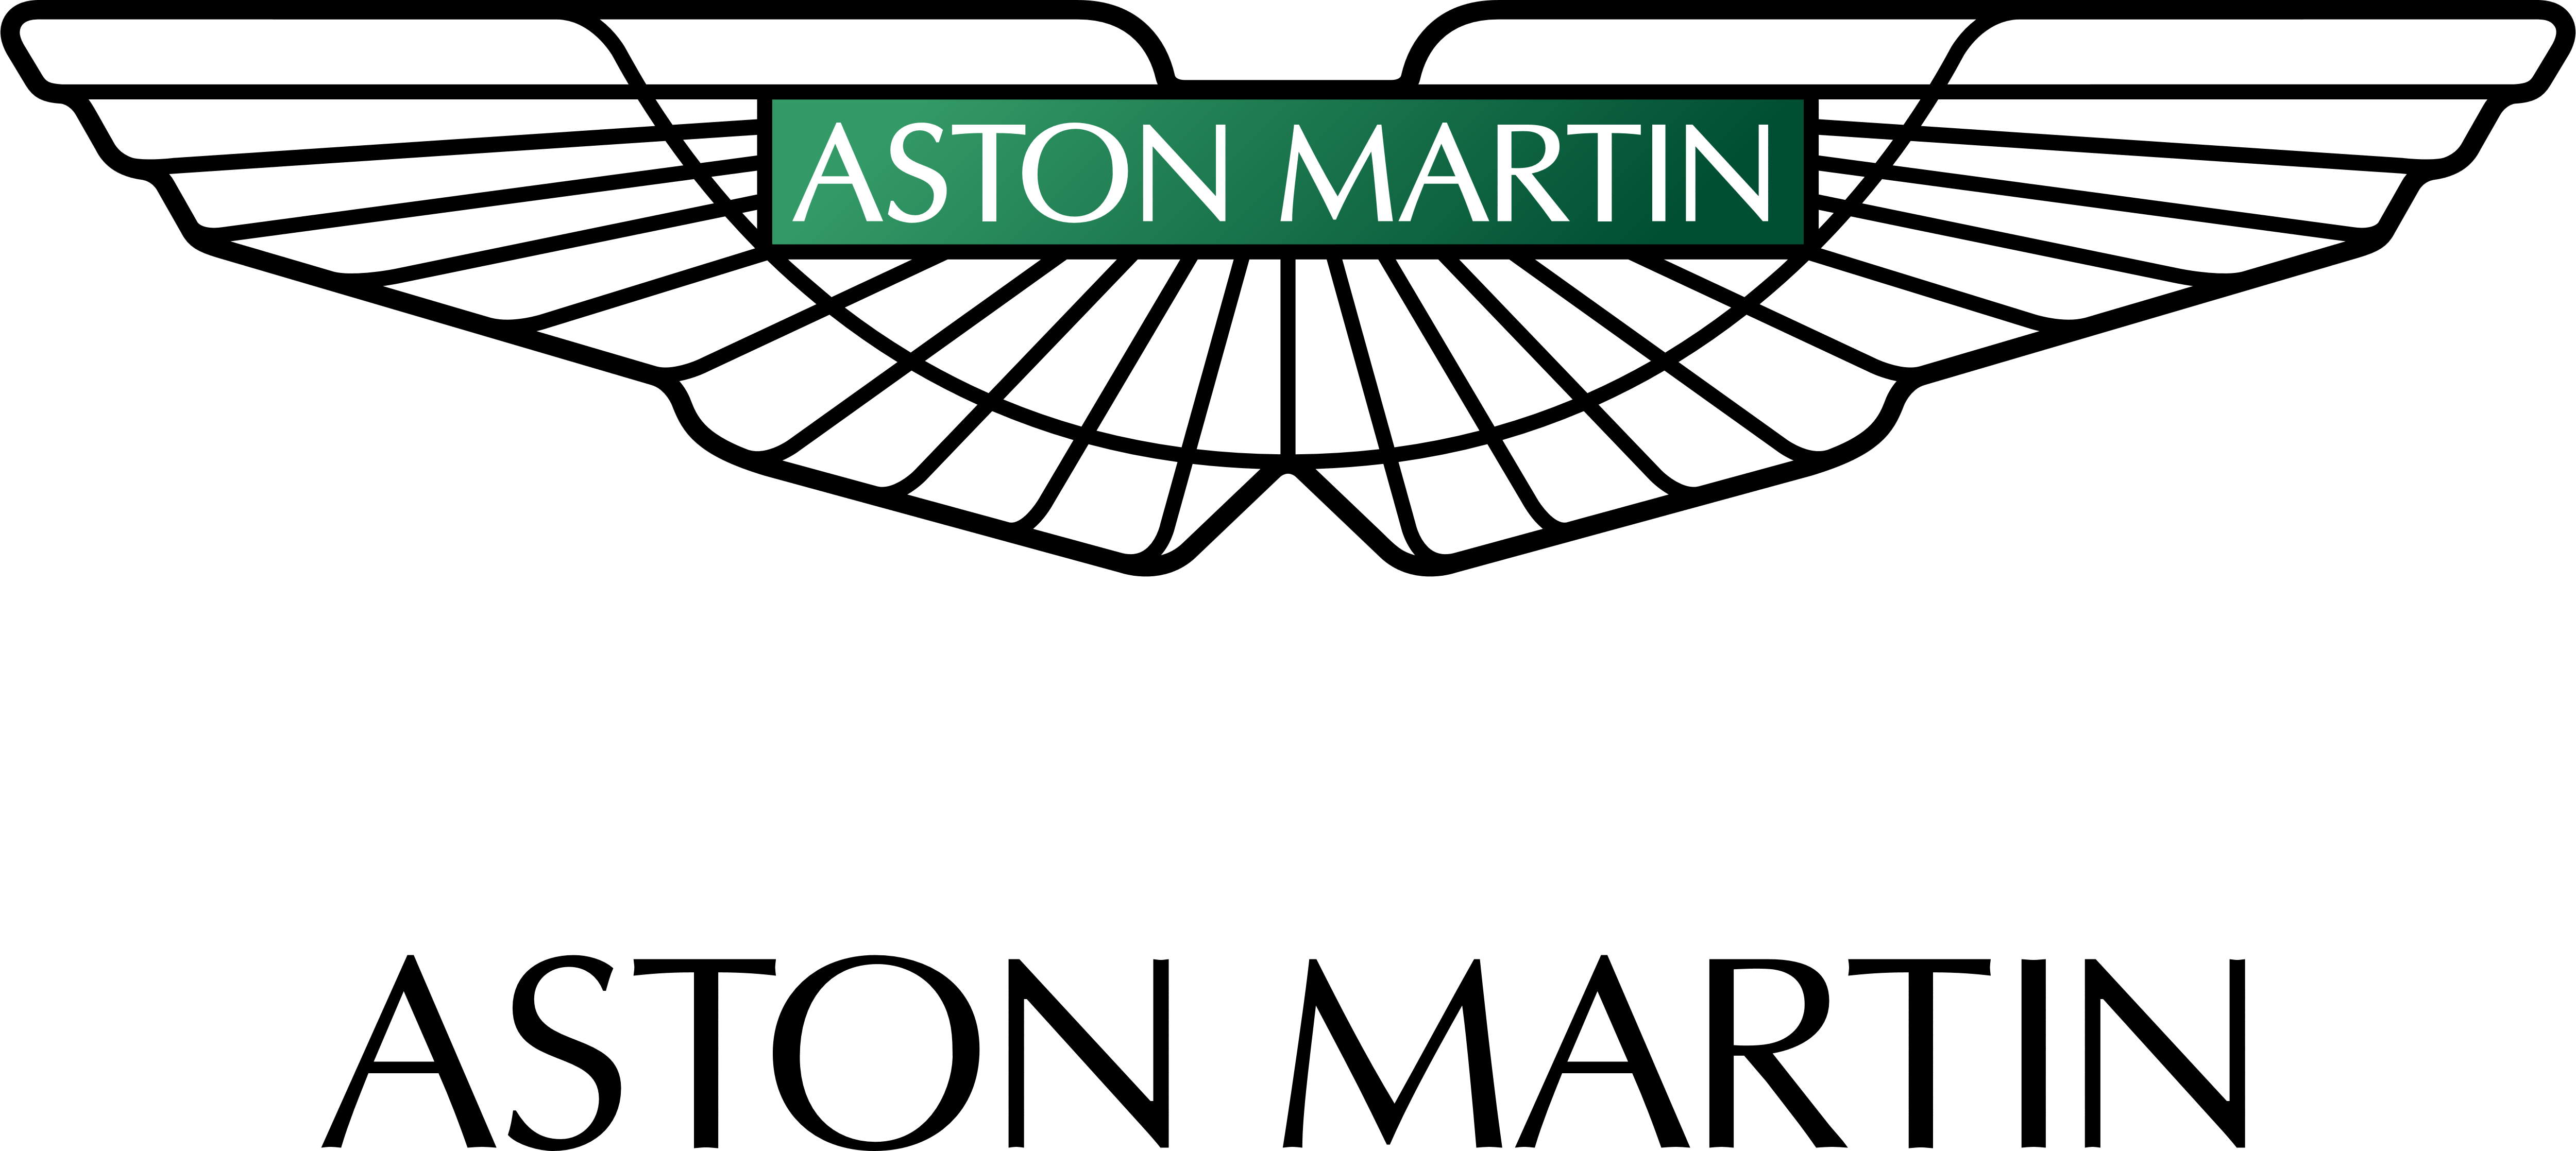 Download Free Vector Aston Ma